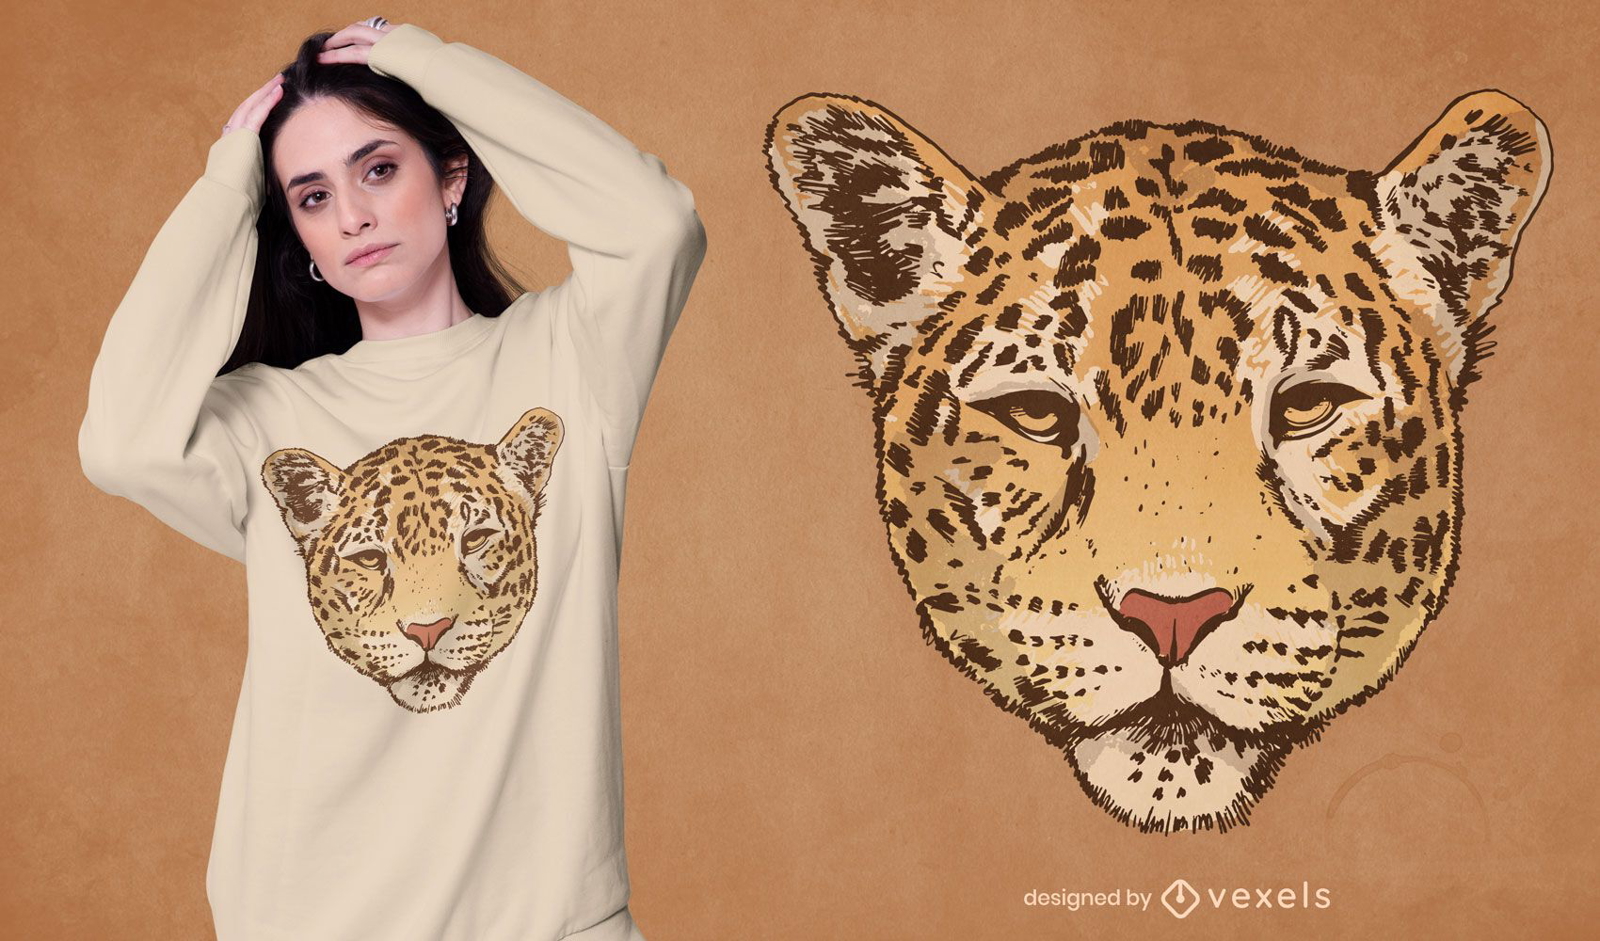 Dise?o de camiseta con ilustraci?n de cara de leopardo